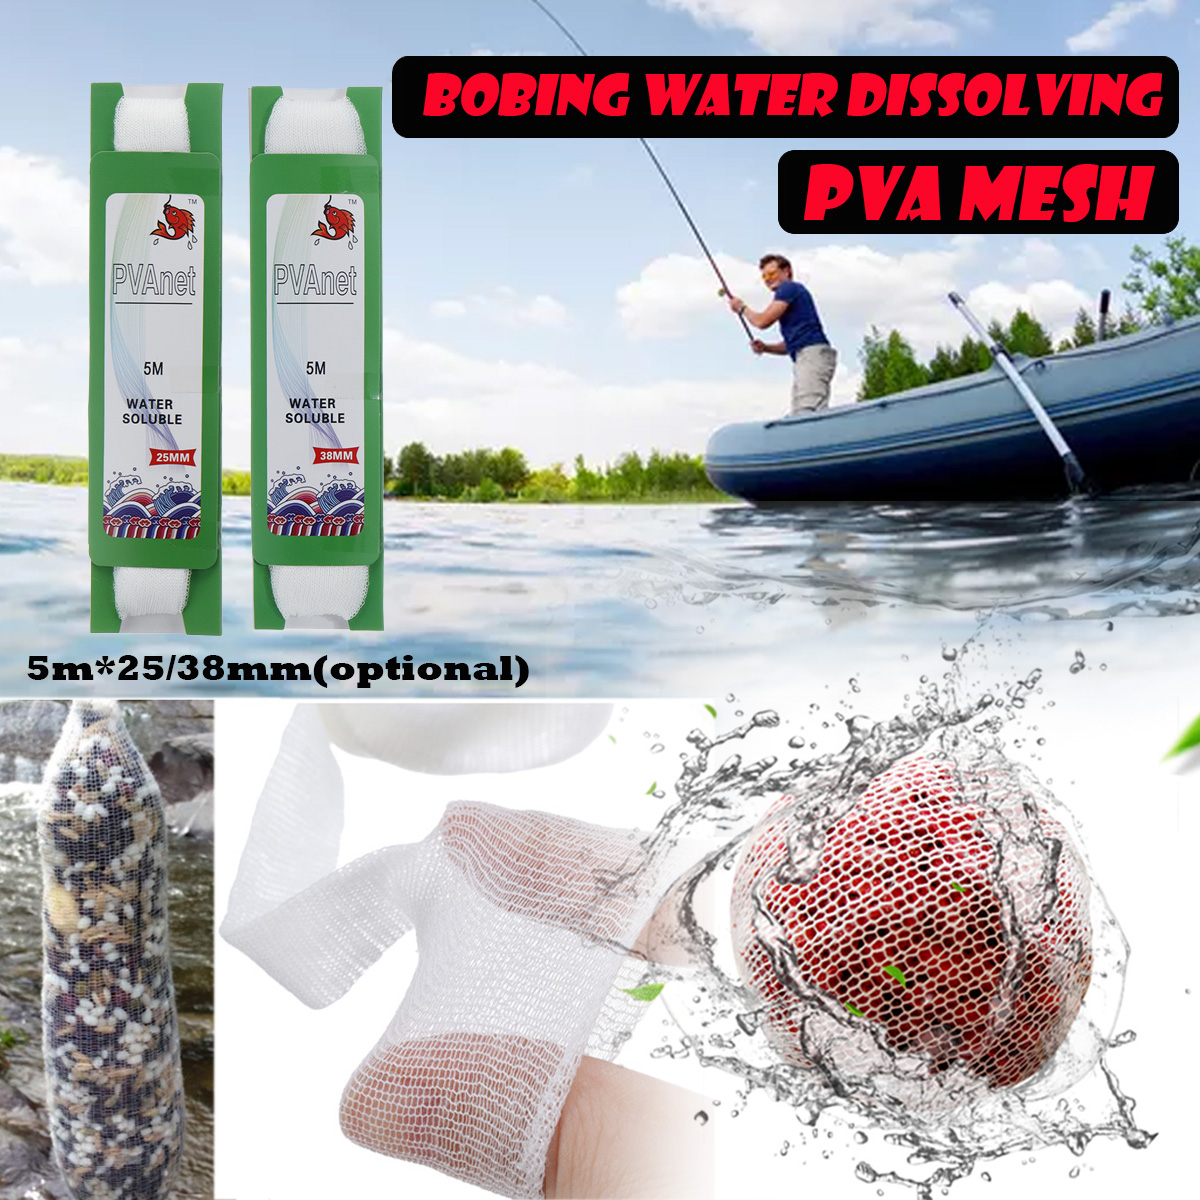 ZANLURE-25mm-Dissolving-PVA-Fishing-Net-Fishing-Bait-Thrower-Fishing-Cage-Play-Nest-Device-1619961-1